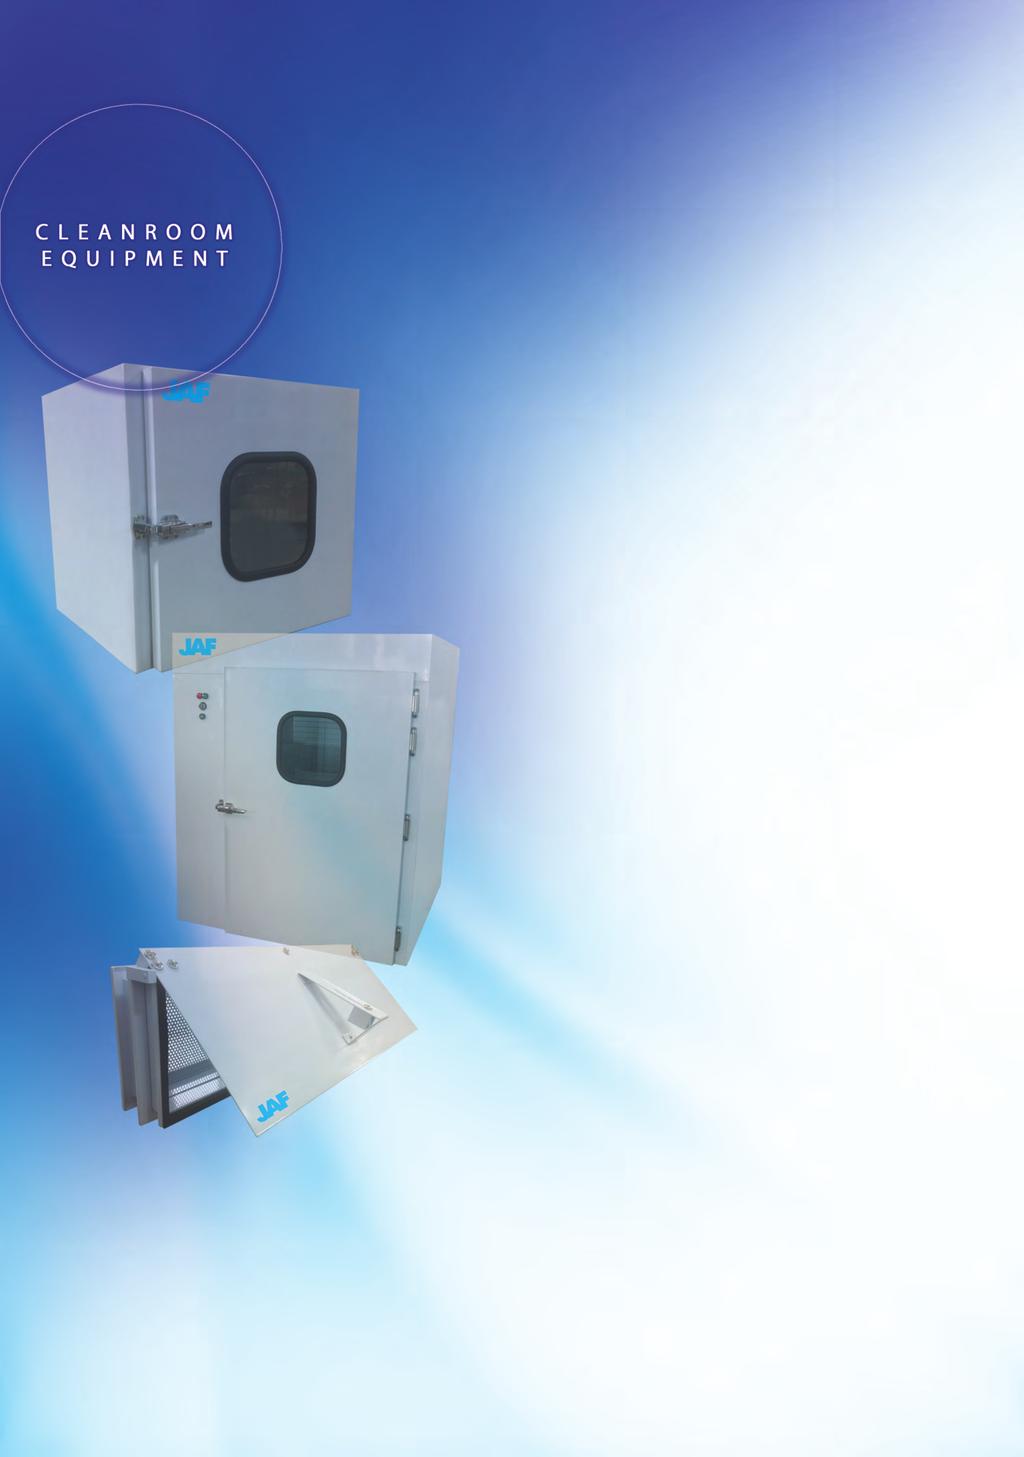 CLEAR ROOM EQUIPMENT CLEAR ROOM EQUIPMENT AIR SHOWER PRESSURE RELIEF DAMPER PASS BOX